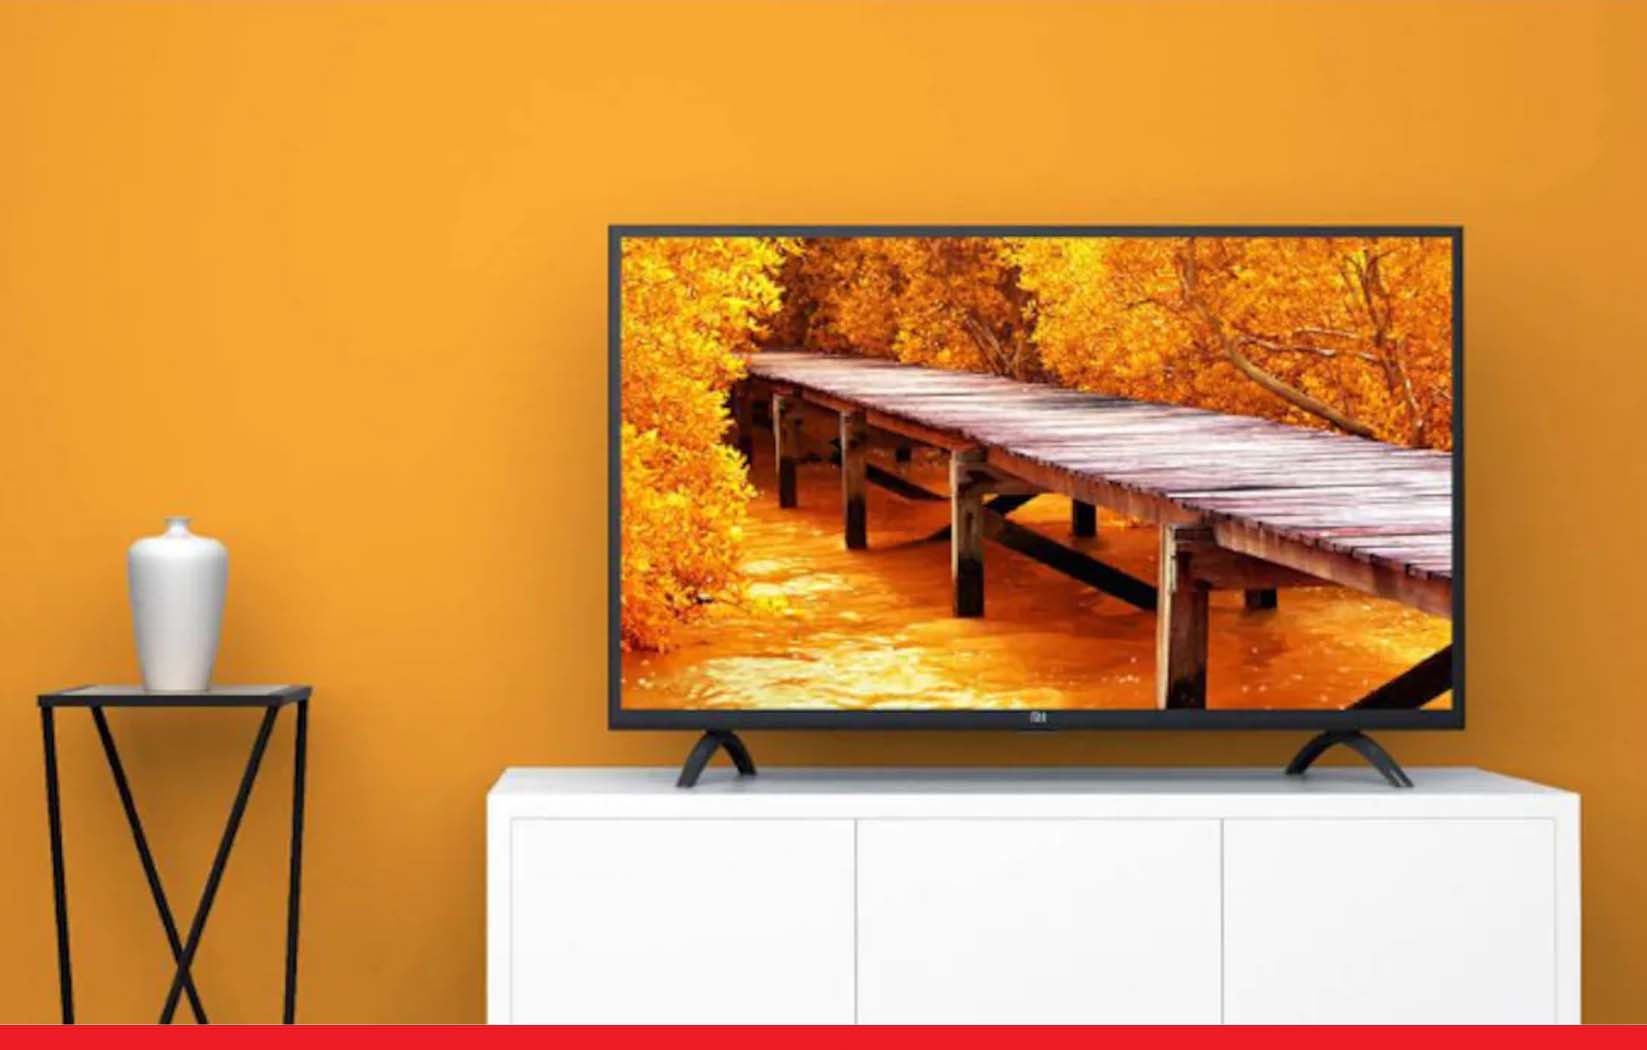 Redmi के 25 हज़ार वाले Smart TV को सिर्फ 11,699 रुपये में लाएं घर